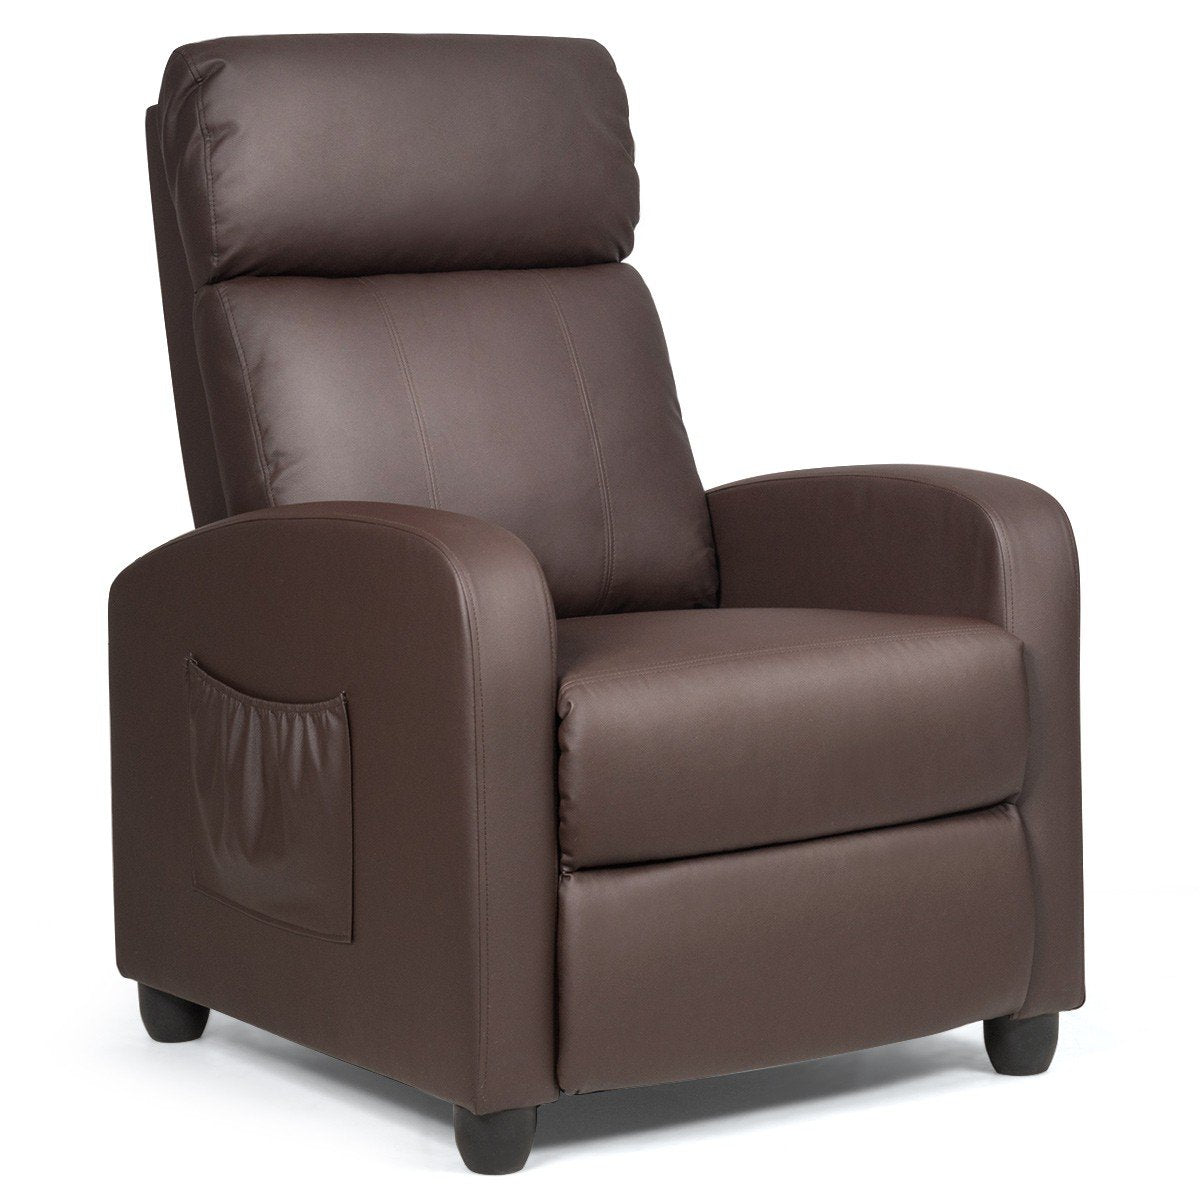 Giantex Recliner Chair for Living Room